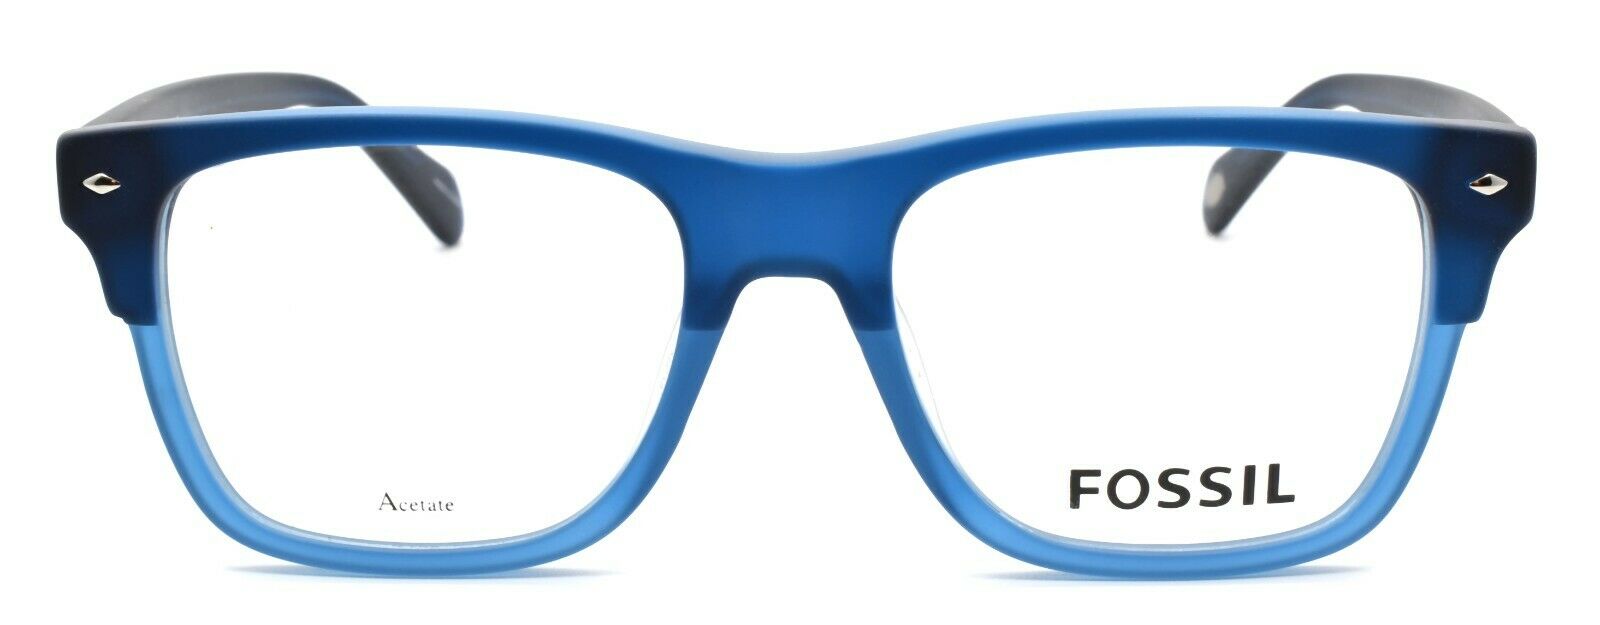 2-Fossil FOS 7031 RCT Men's Eyeglasses Frames 52-18-140 Matte Blue + CASE-716736064734-IKSpecs